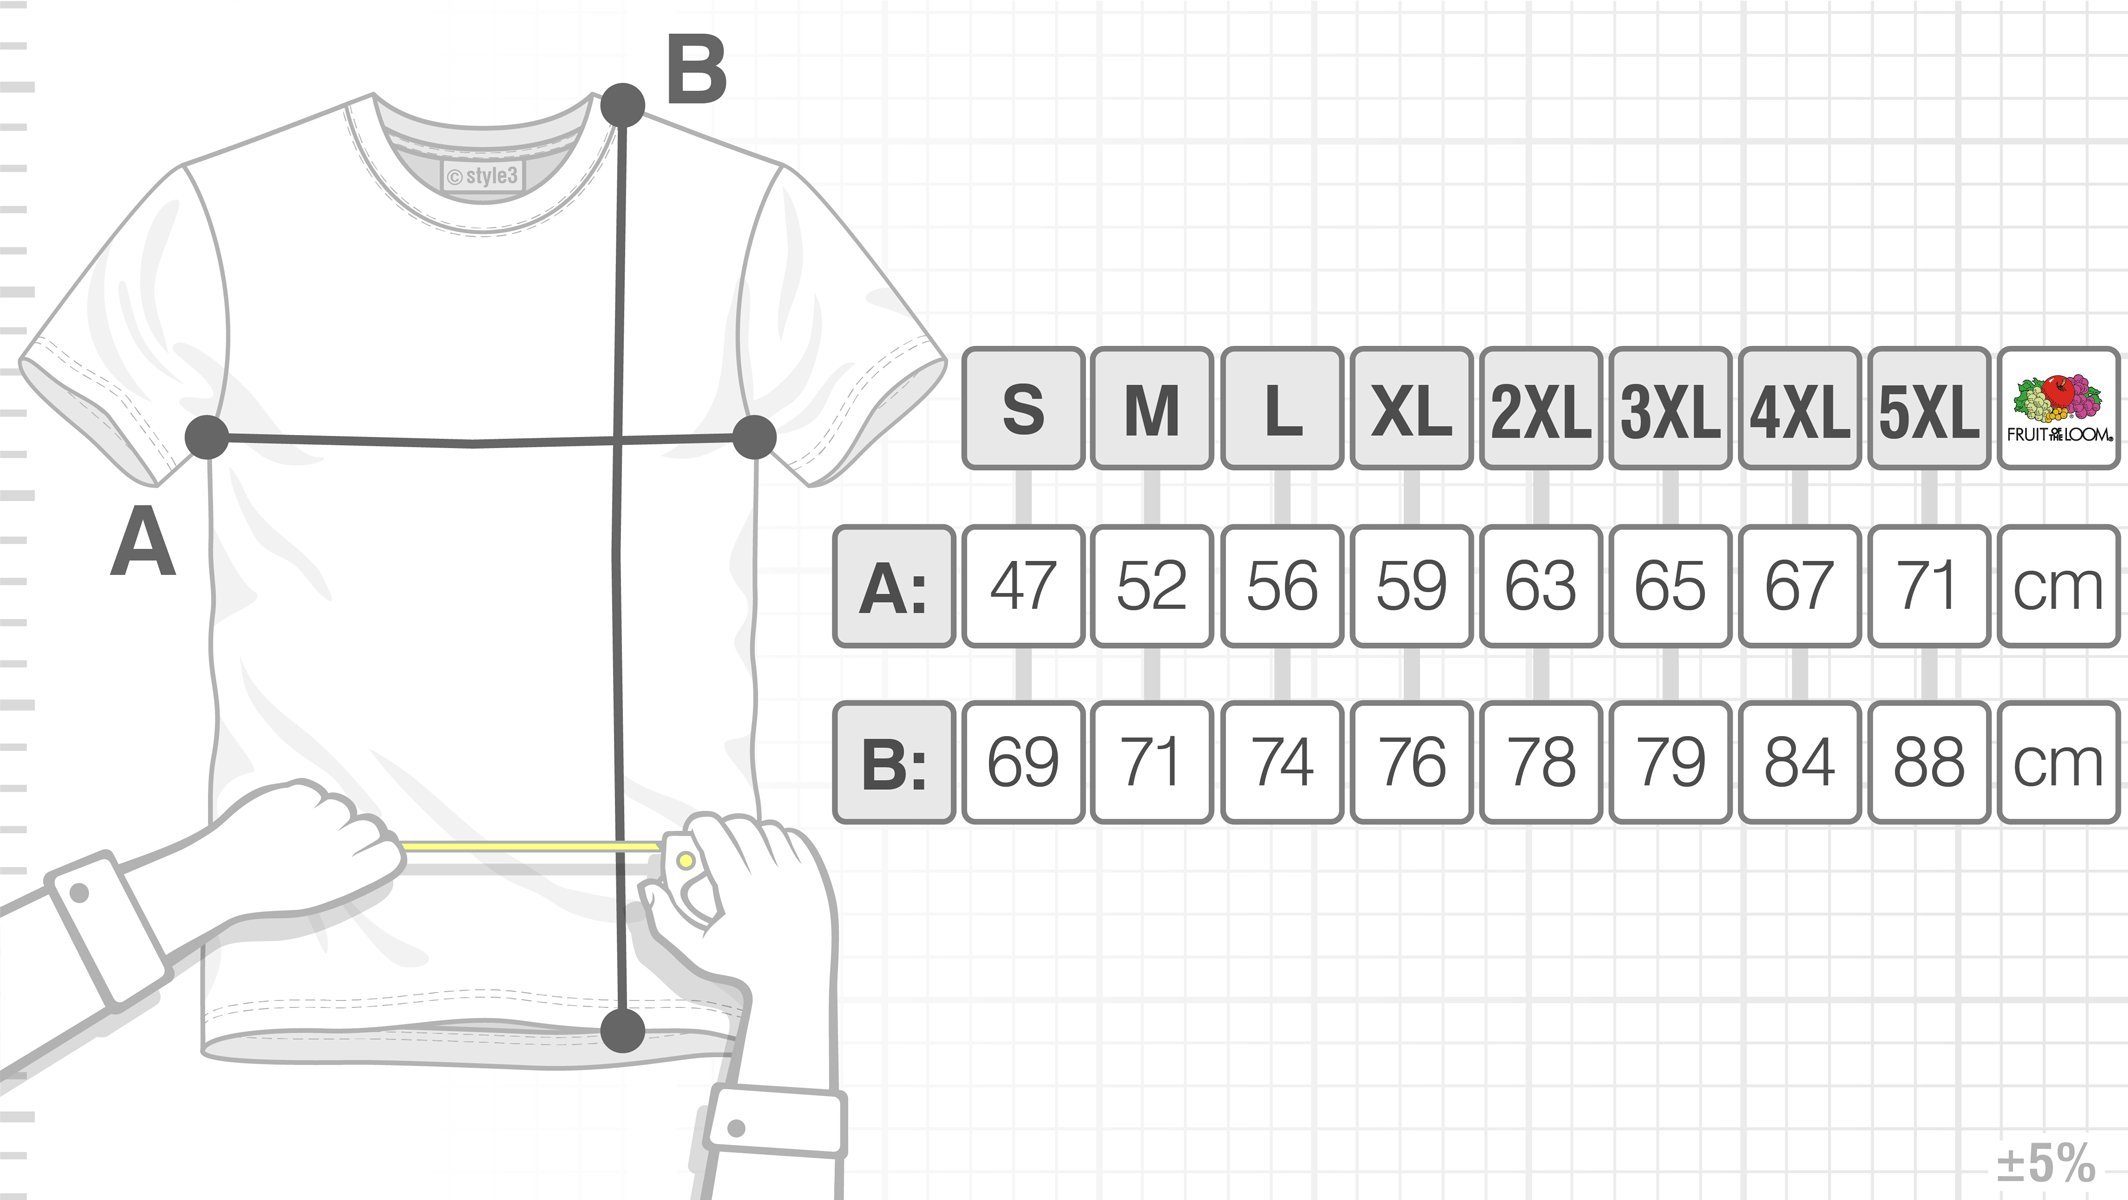 Inner big style3 cooper lila bang Circles physik Print-Shirt kreis theory Herren Sheldon T-Shirt kreise